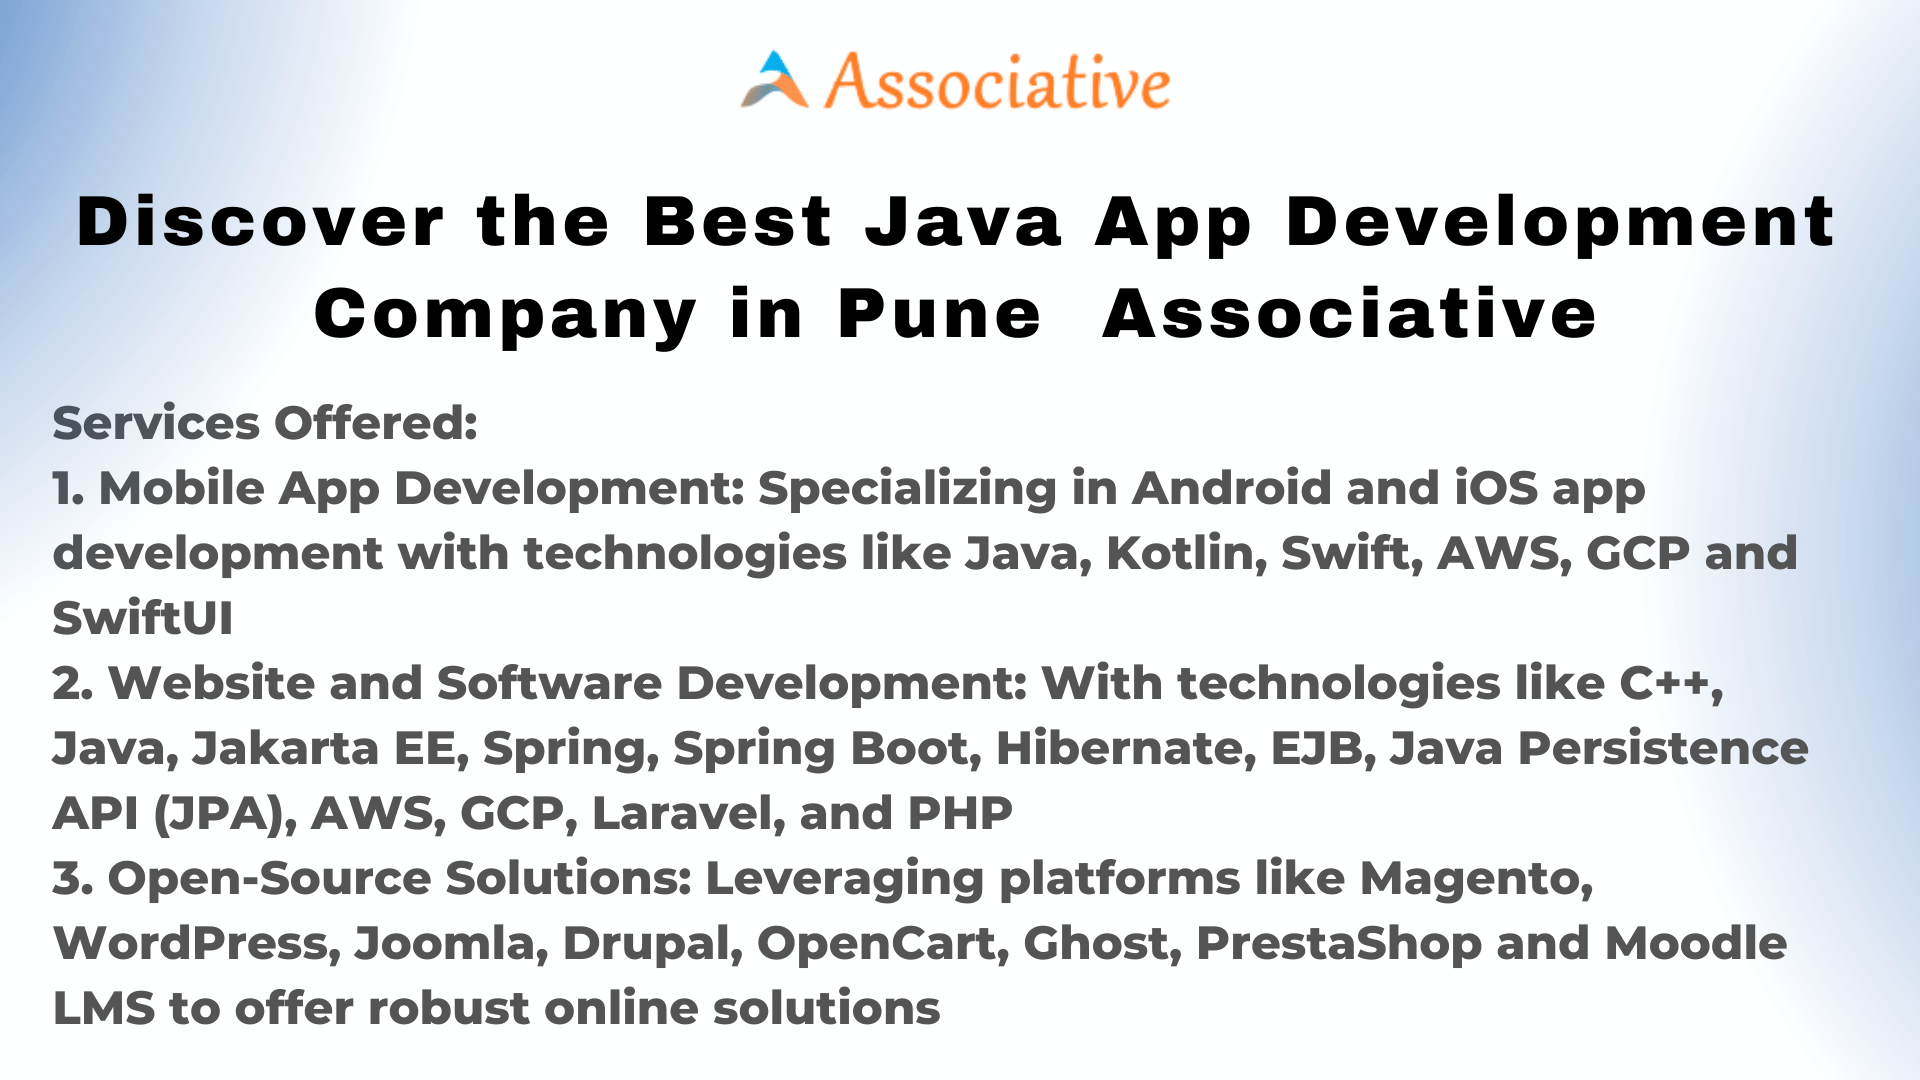 Discover the Best Java App Development Company in Pune Associative